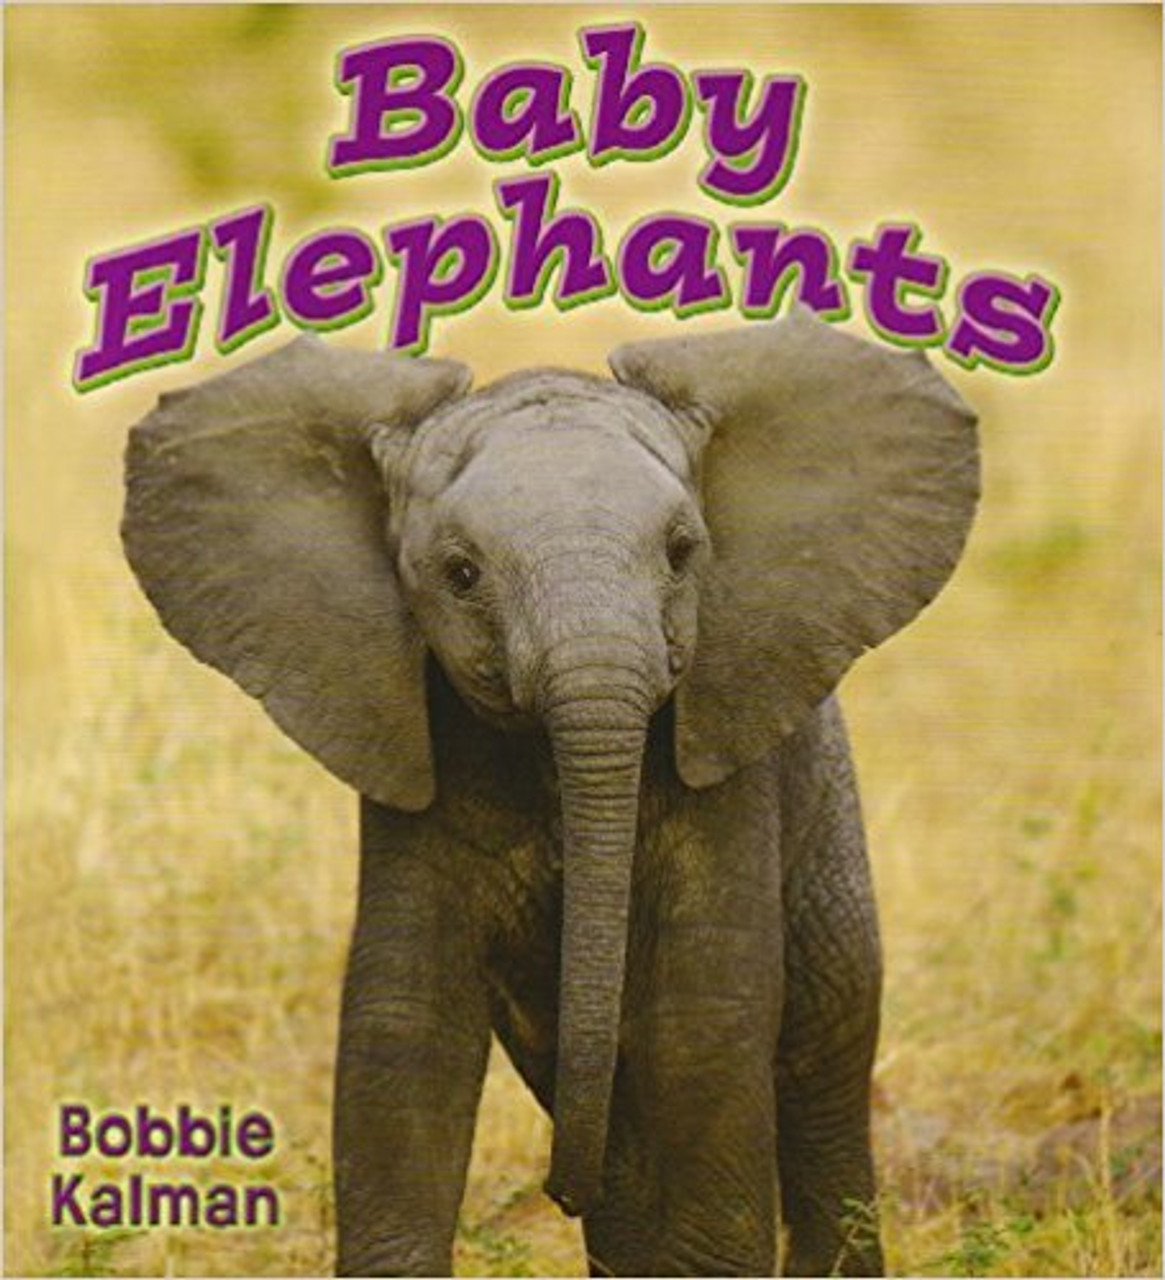 Baby Elephants (Paperback) by Bobbie Kalman